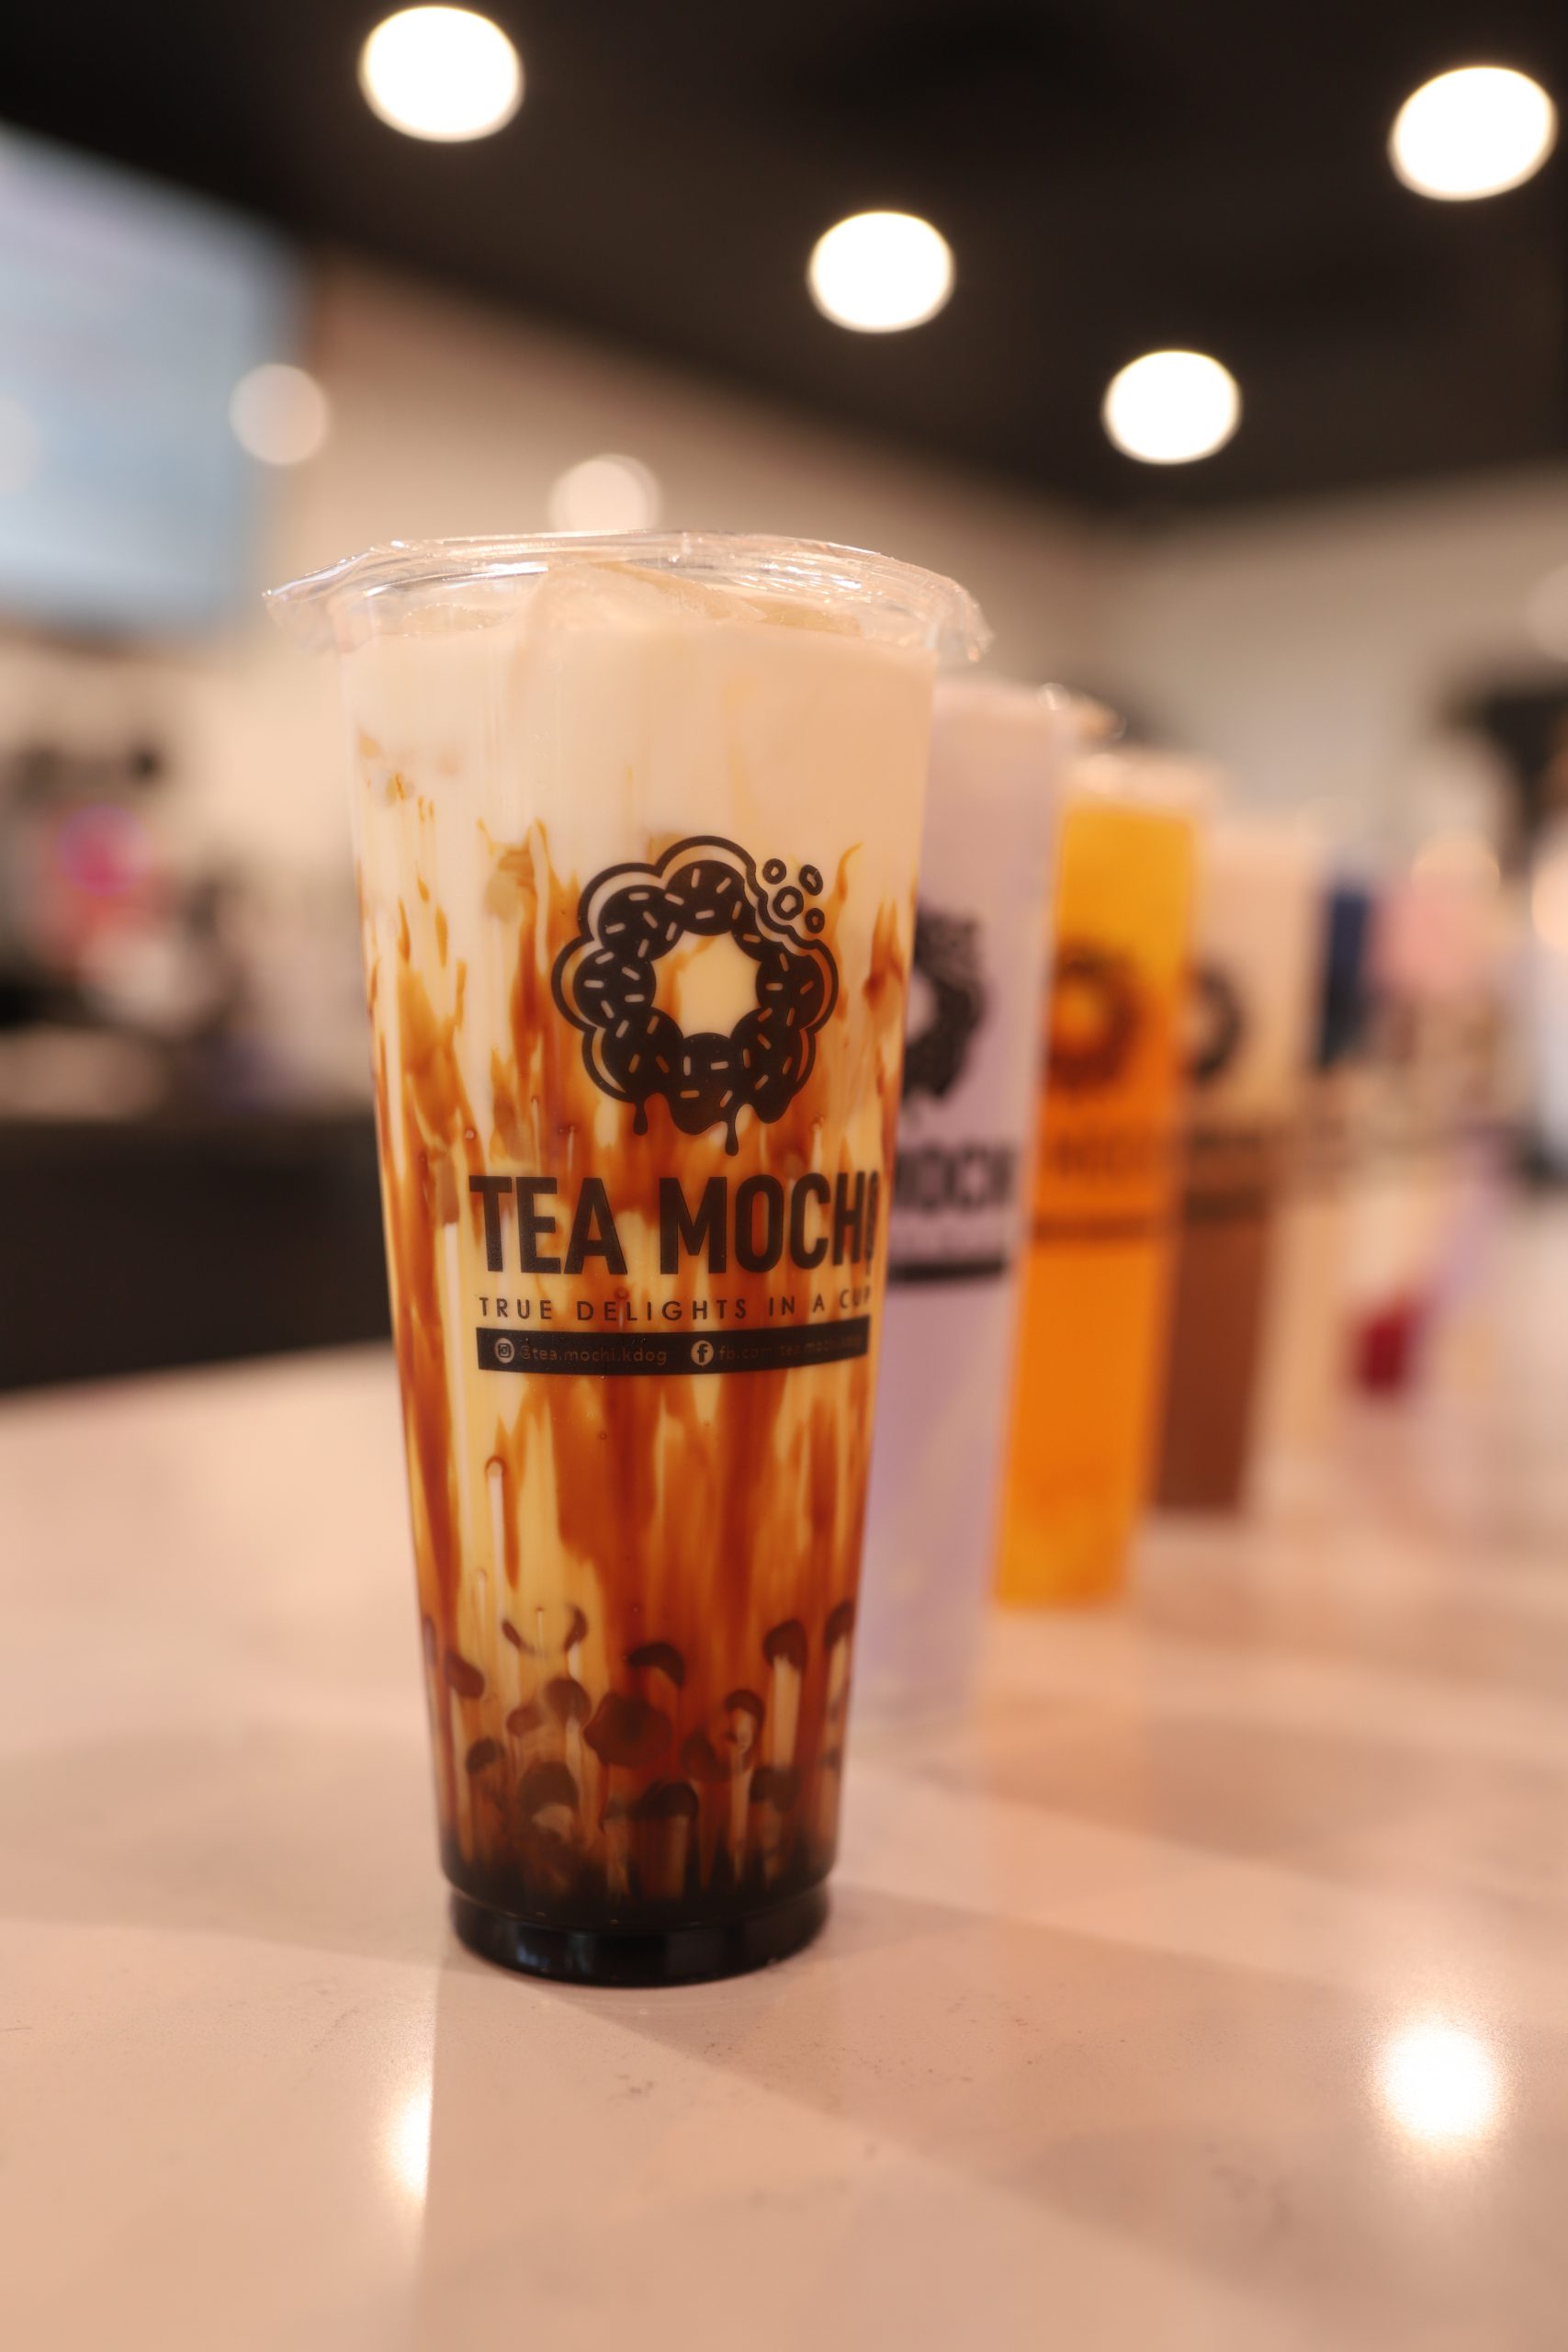 A set of Tea Mochi drinks lined up